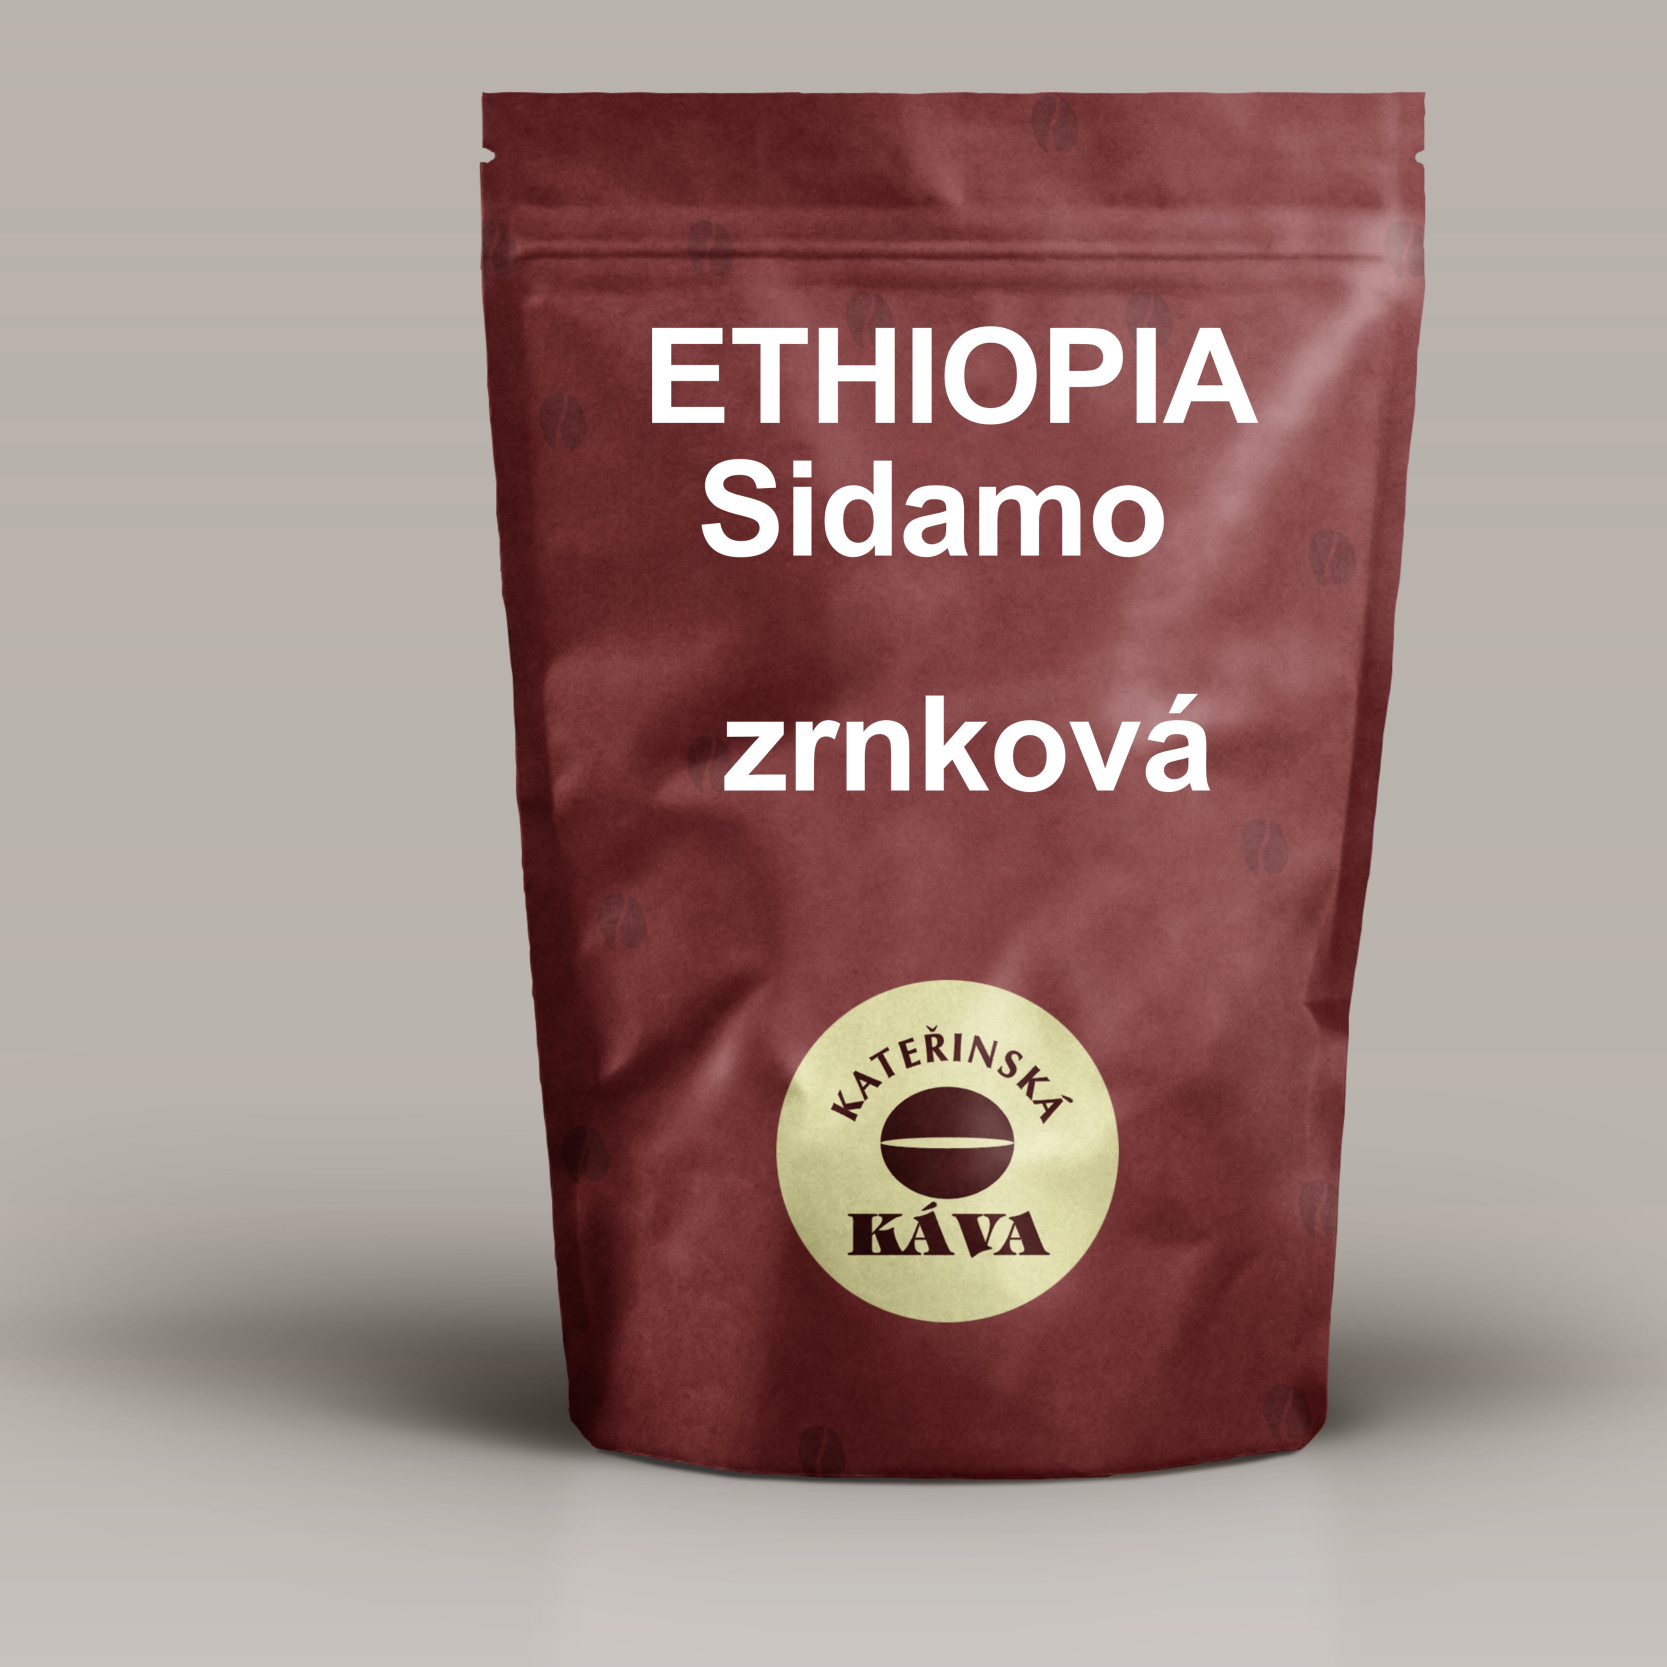 ETHIOPIA Sidamo -zrnková